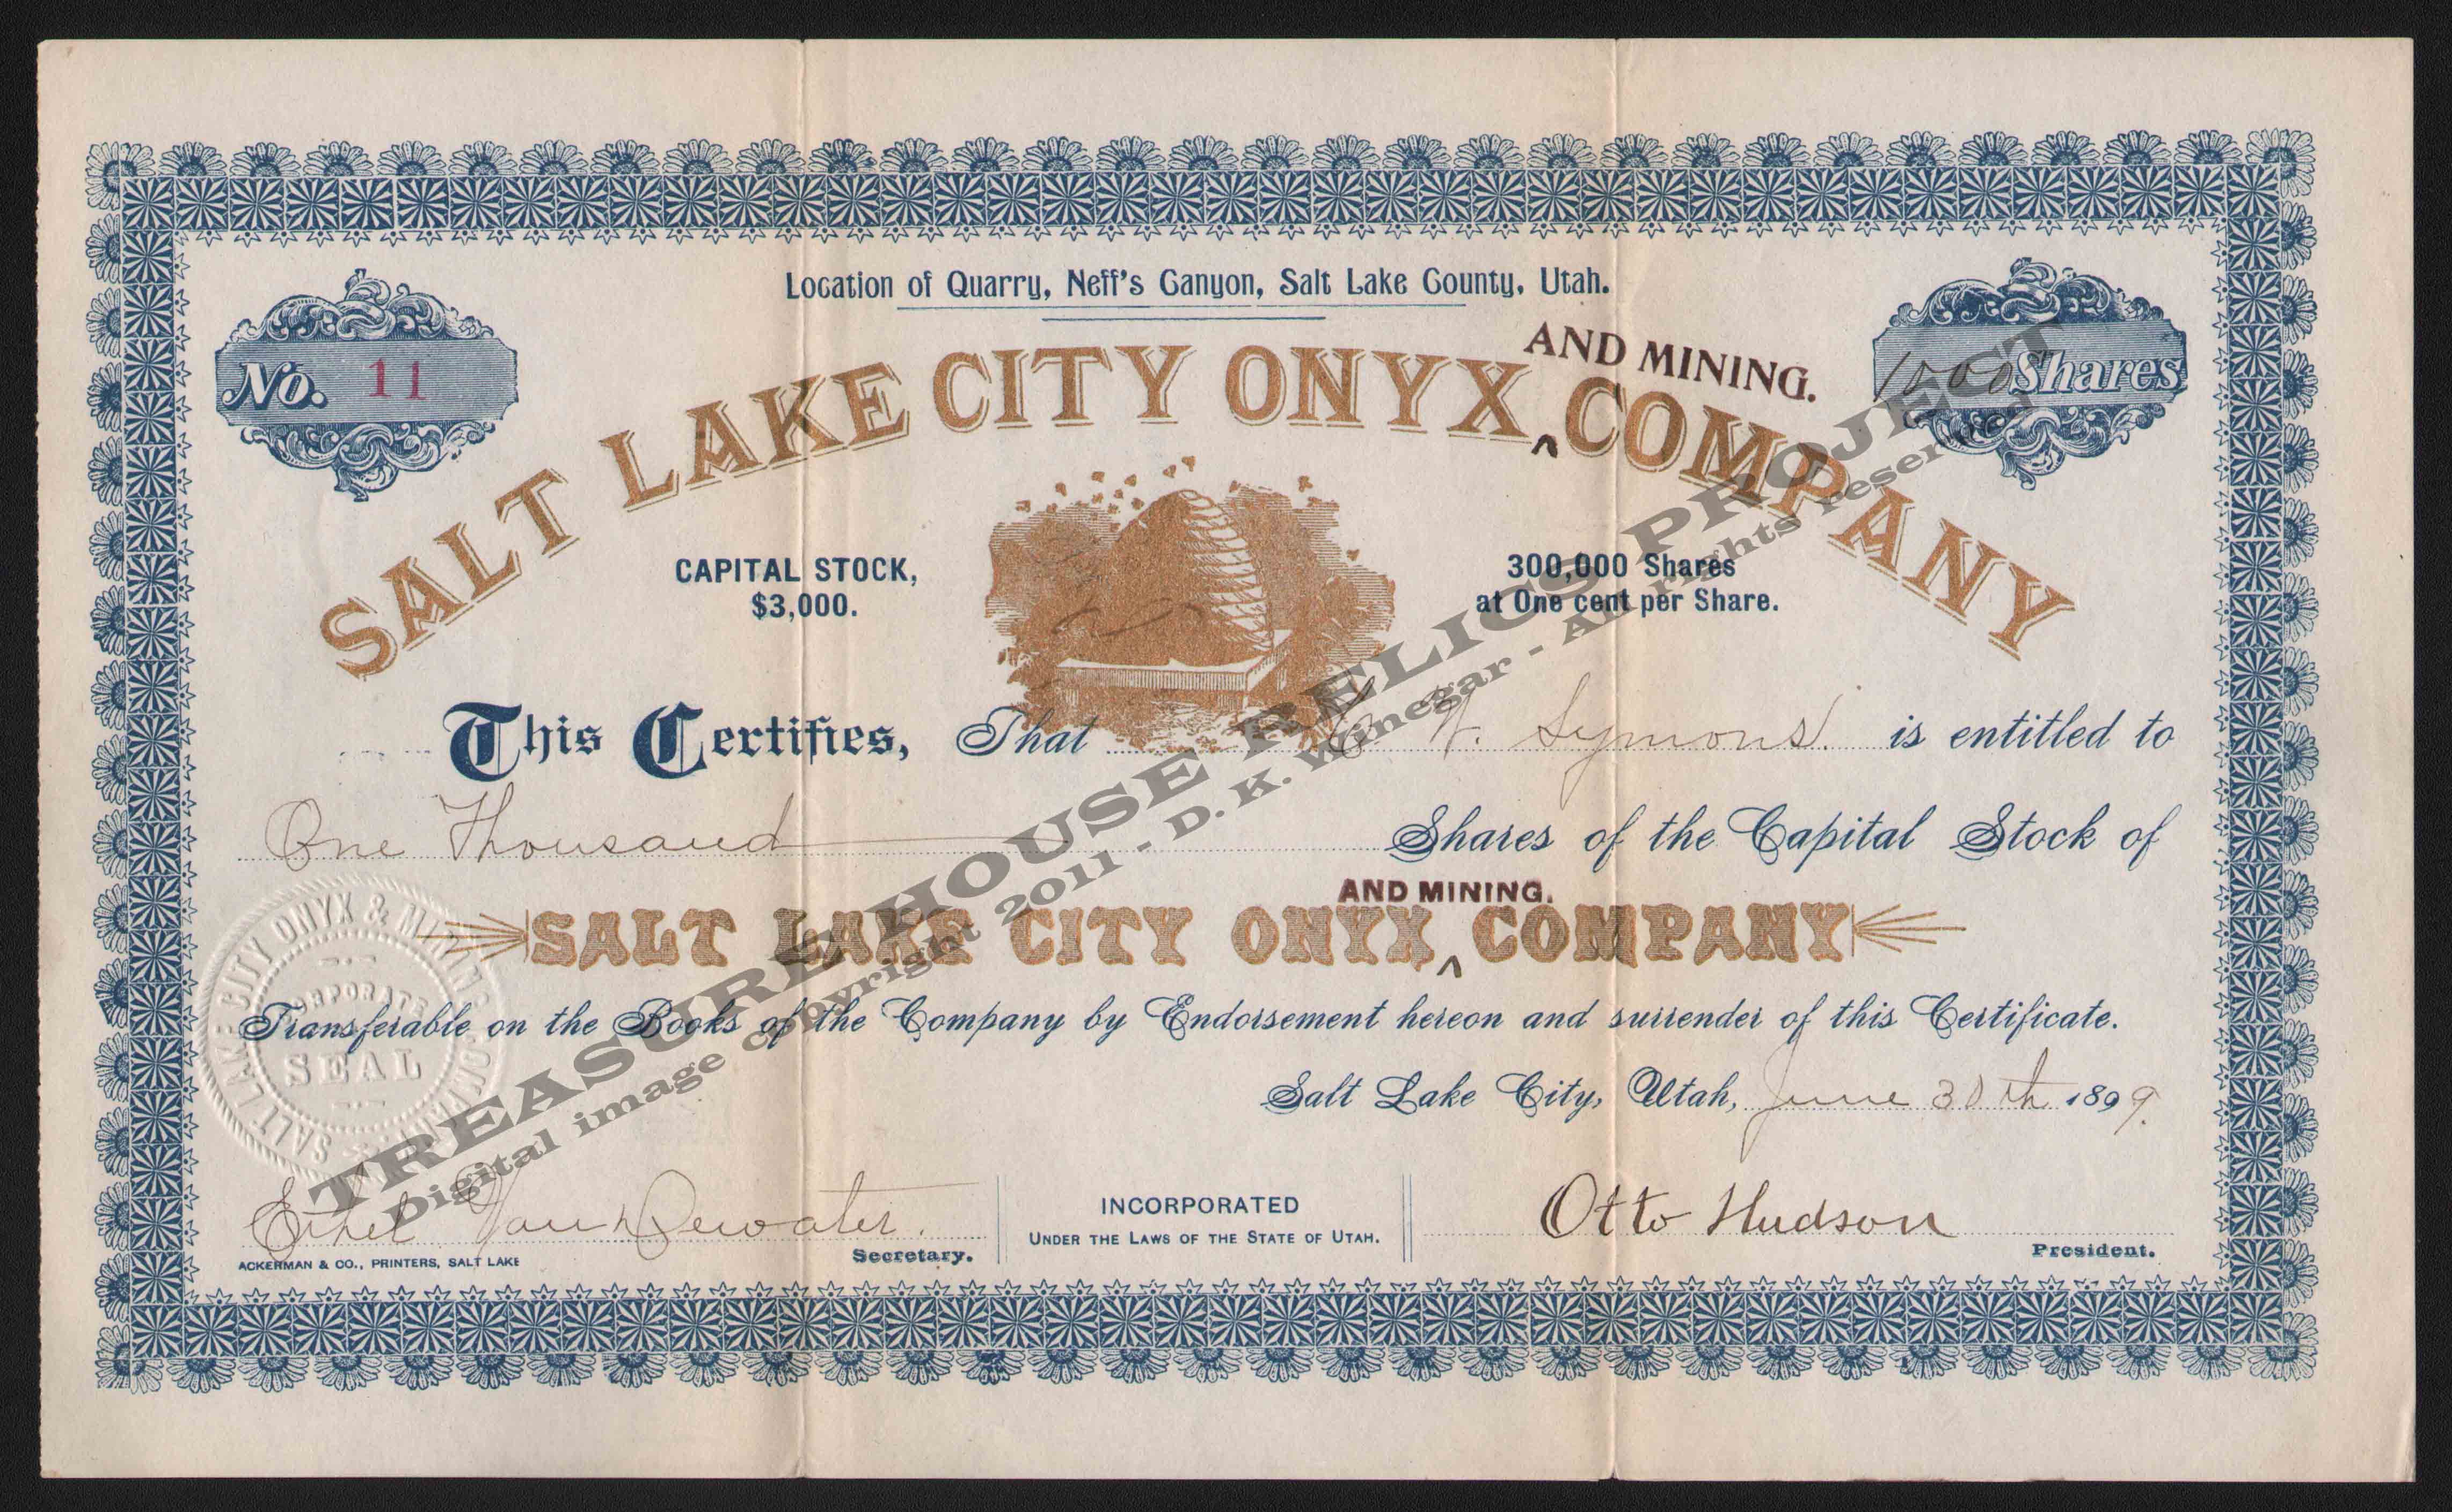 SALT_LAKE_CITY_ONYX_AND_MINING_COMPANY_11_1899_400_emboss.jpg